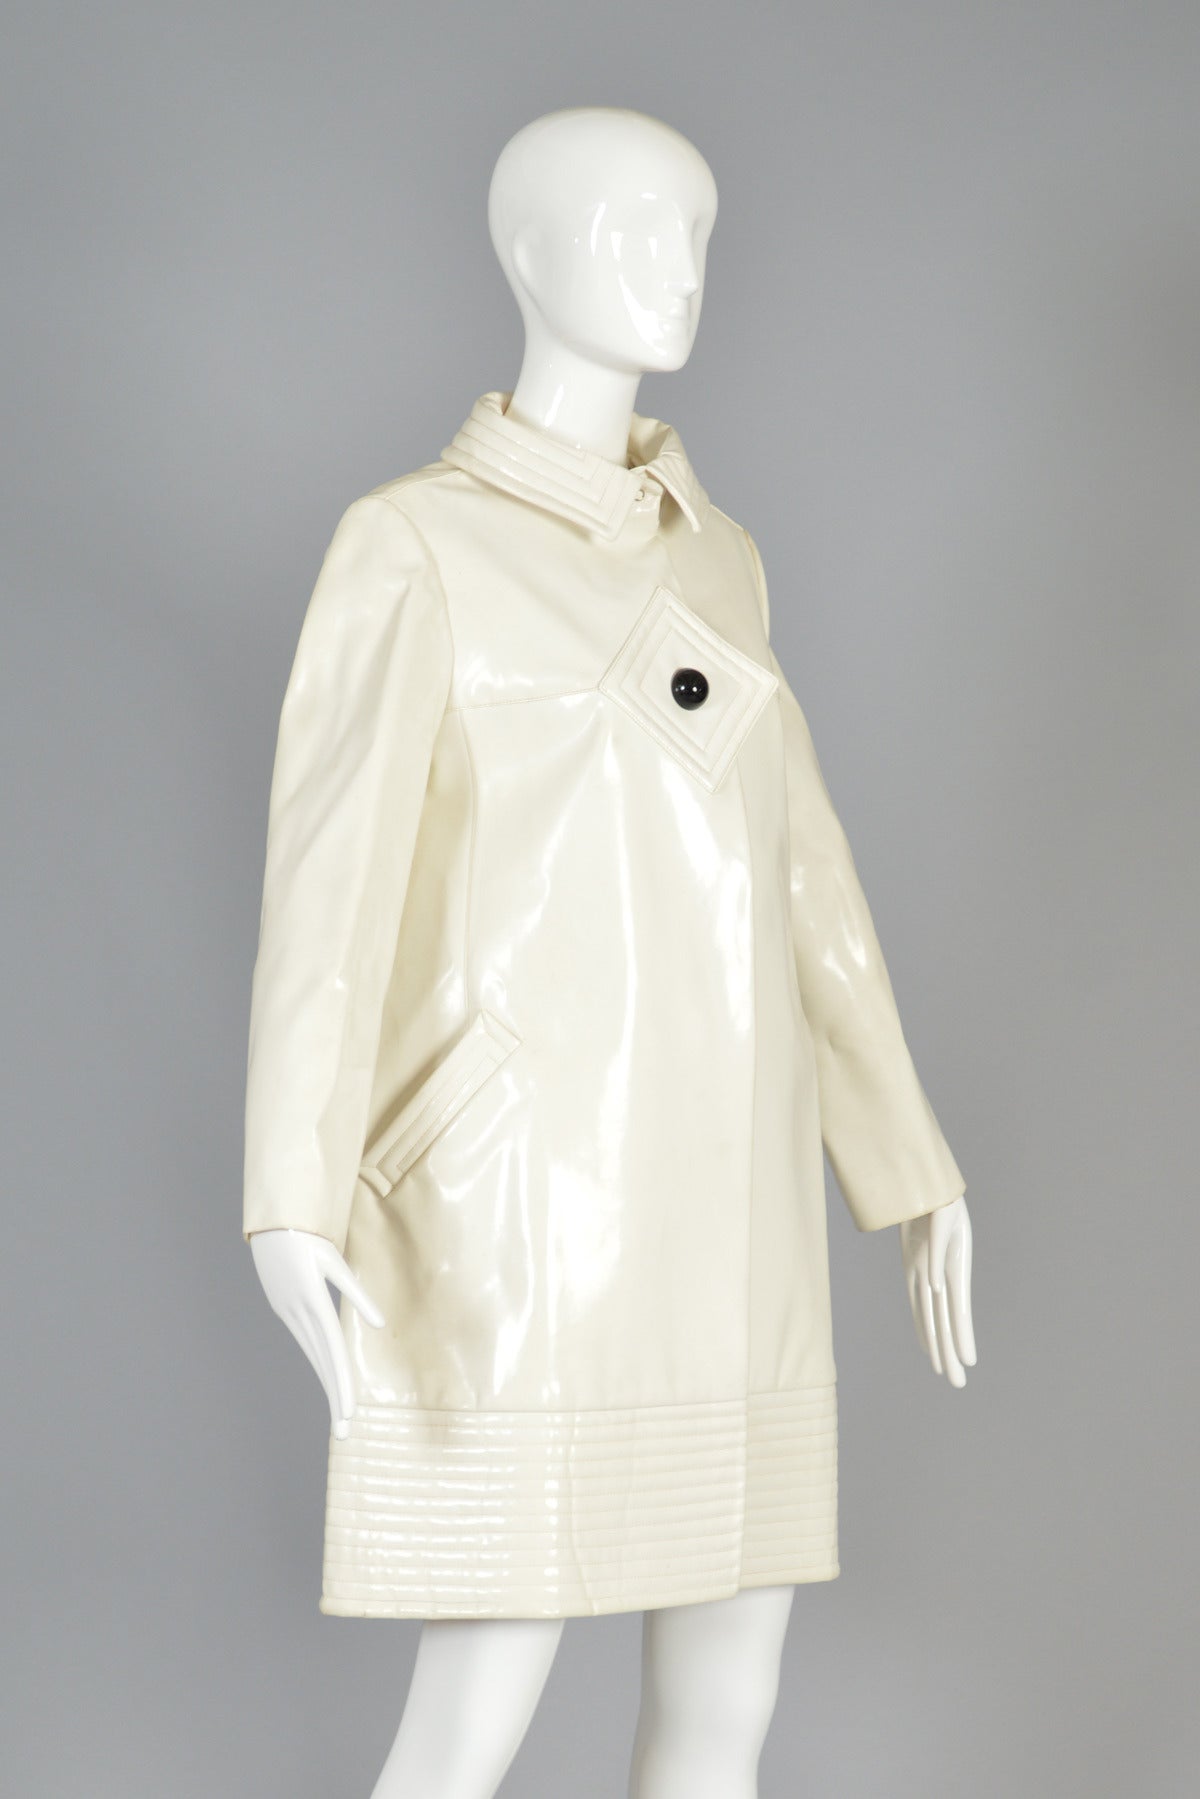 Women's Iconic Pierre Cardin 1969 Space Age Vinyl Rain Coat